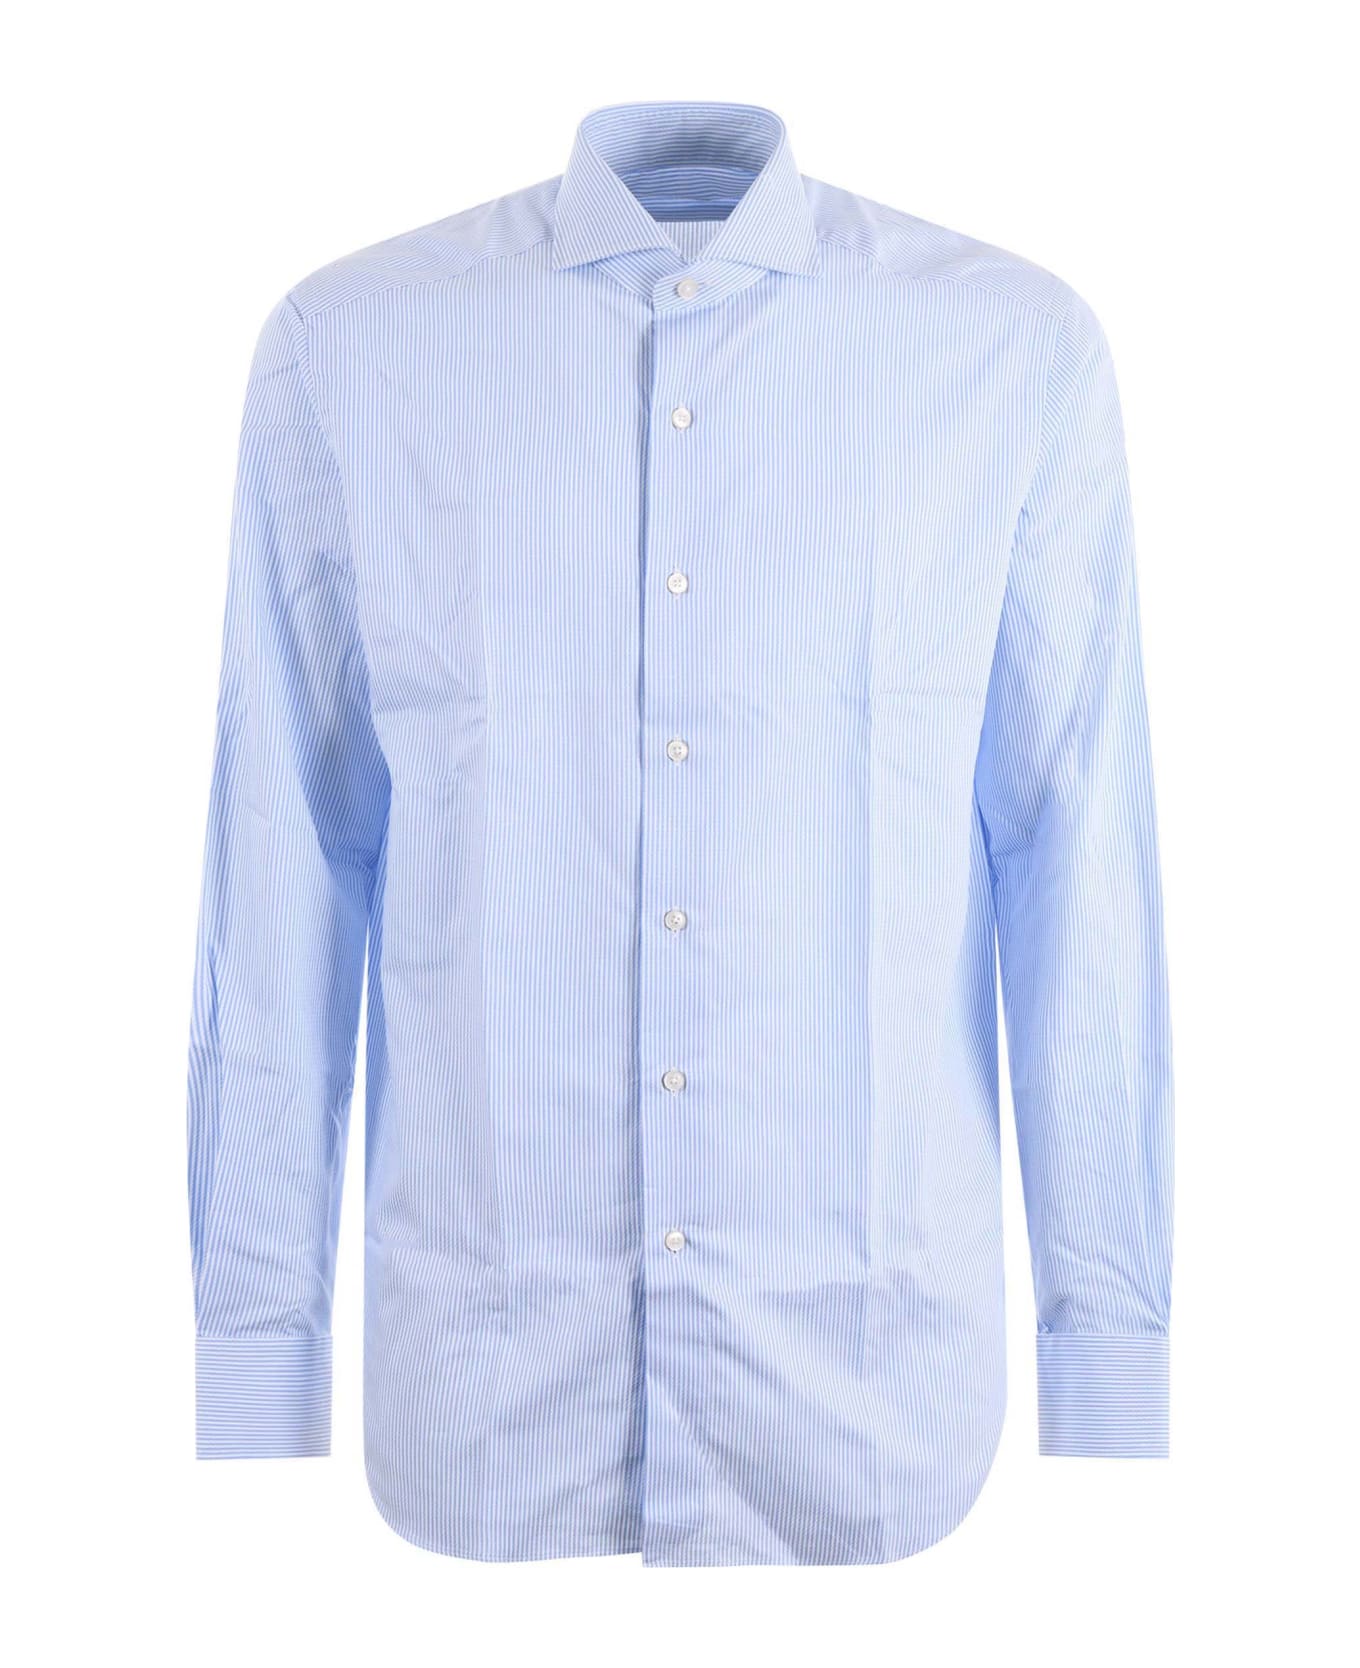 Xacus Shirt - Bianco/celeste